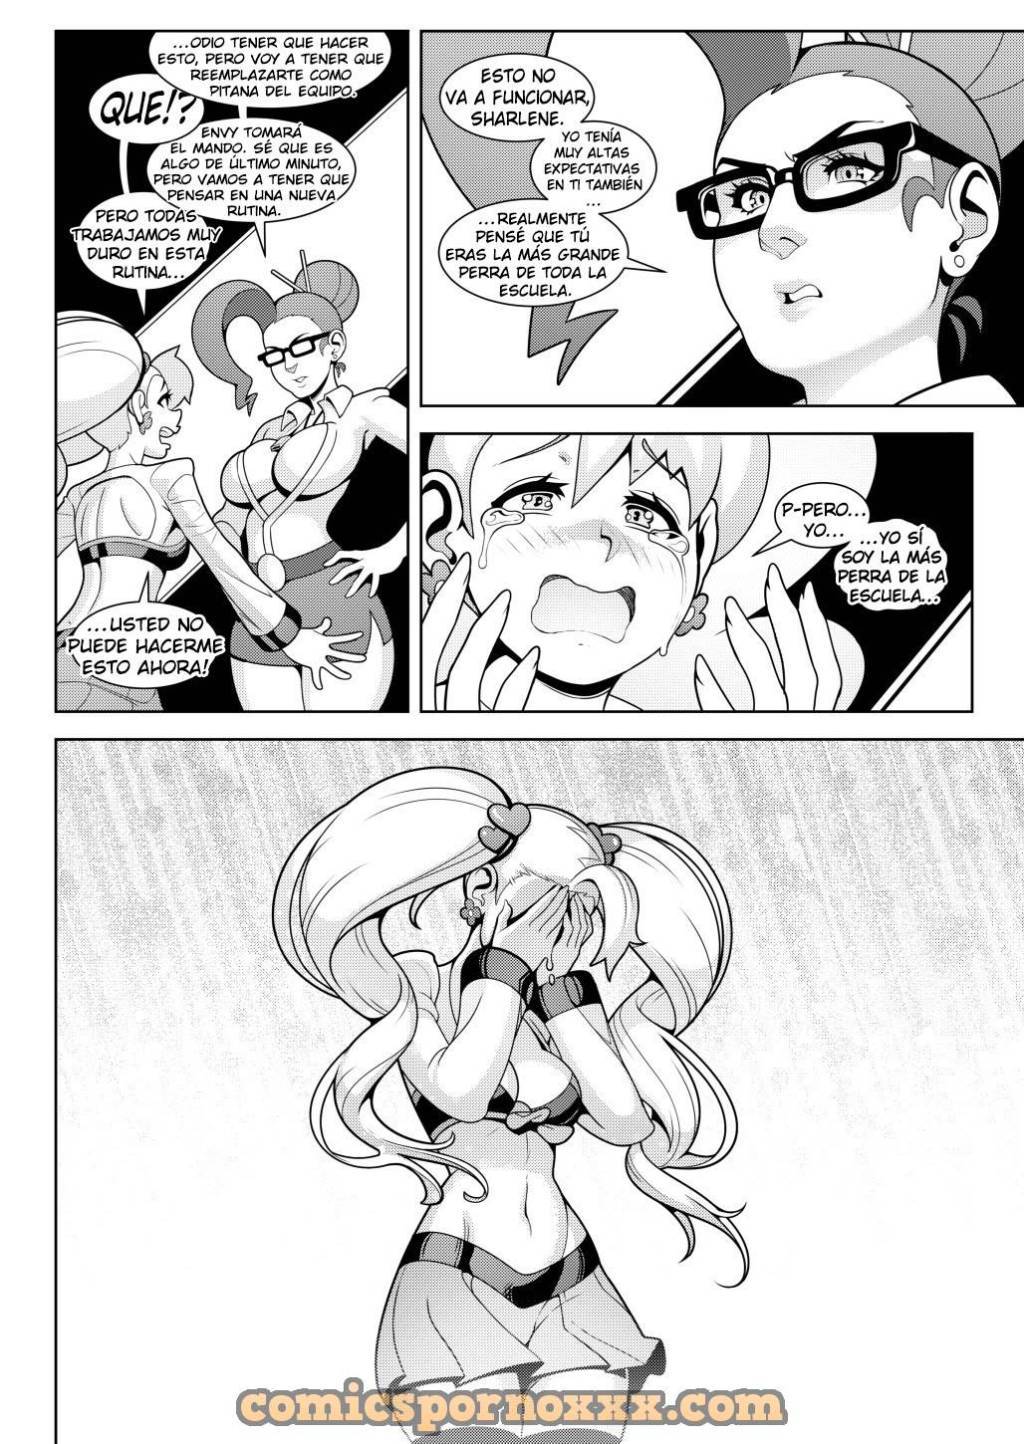 Hot Shit High! #2 - 6 - Comics Porno - Hentai Manga - Cartoon XXX